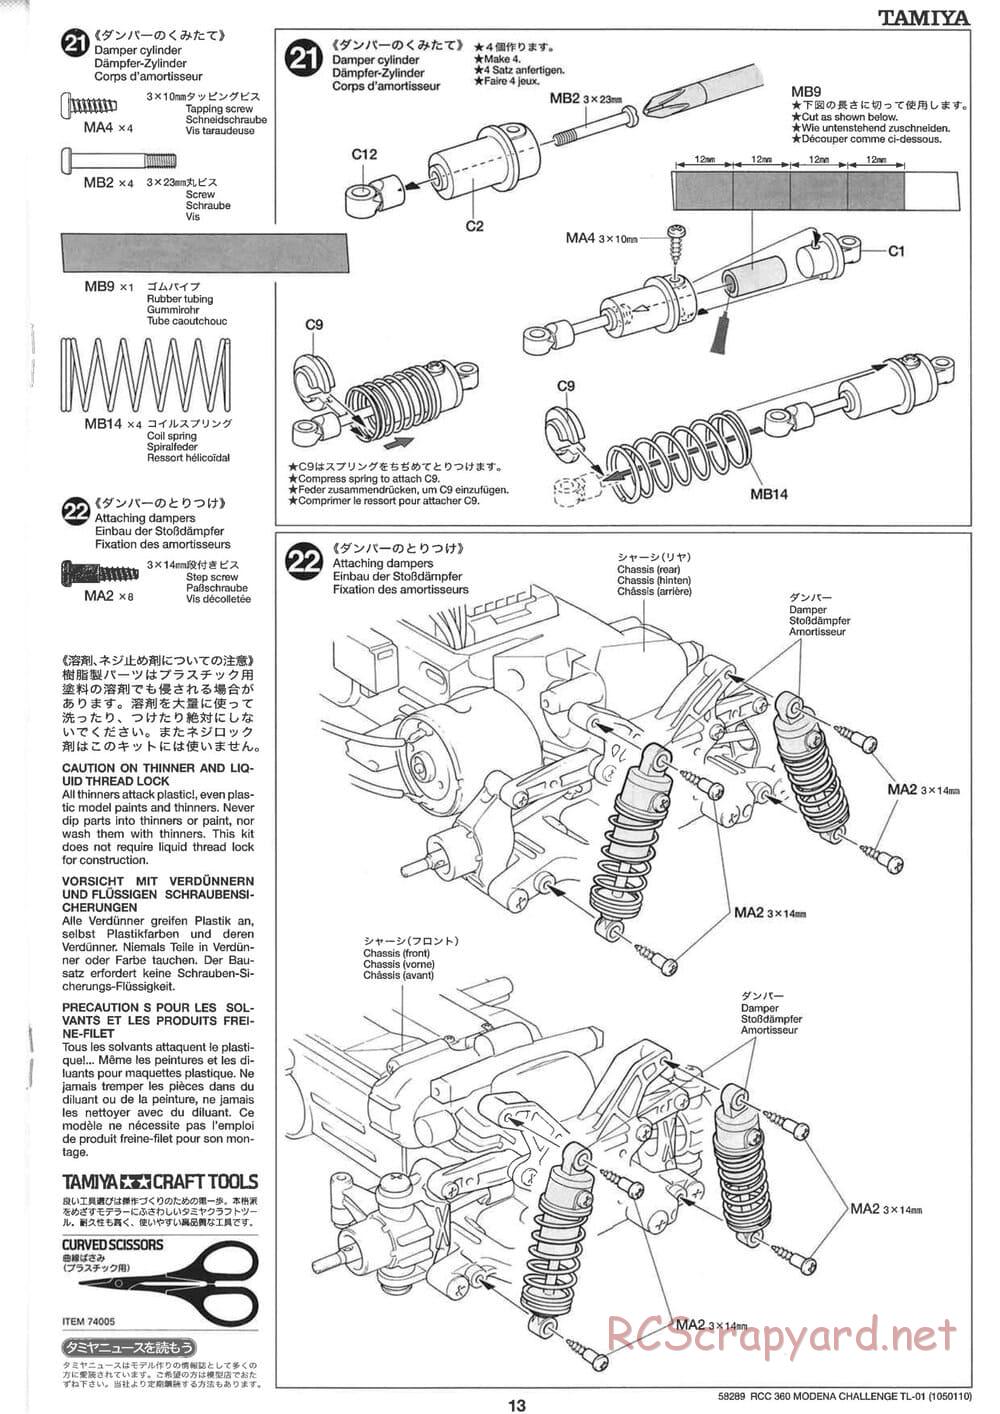 Tamiya - Ferrari 360 Modena Challenge - TL-01 Chassis - Manual - Page 13